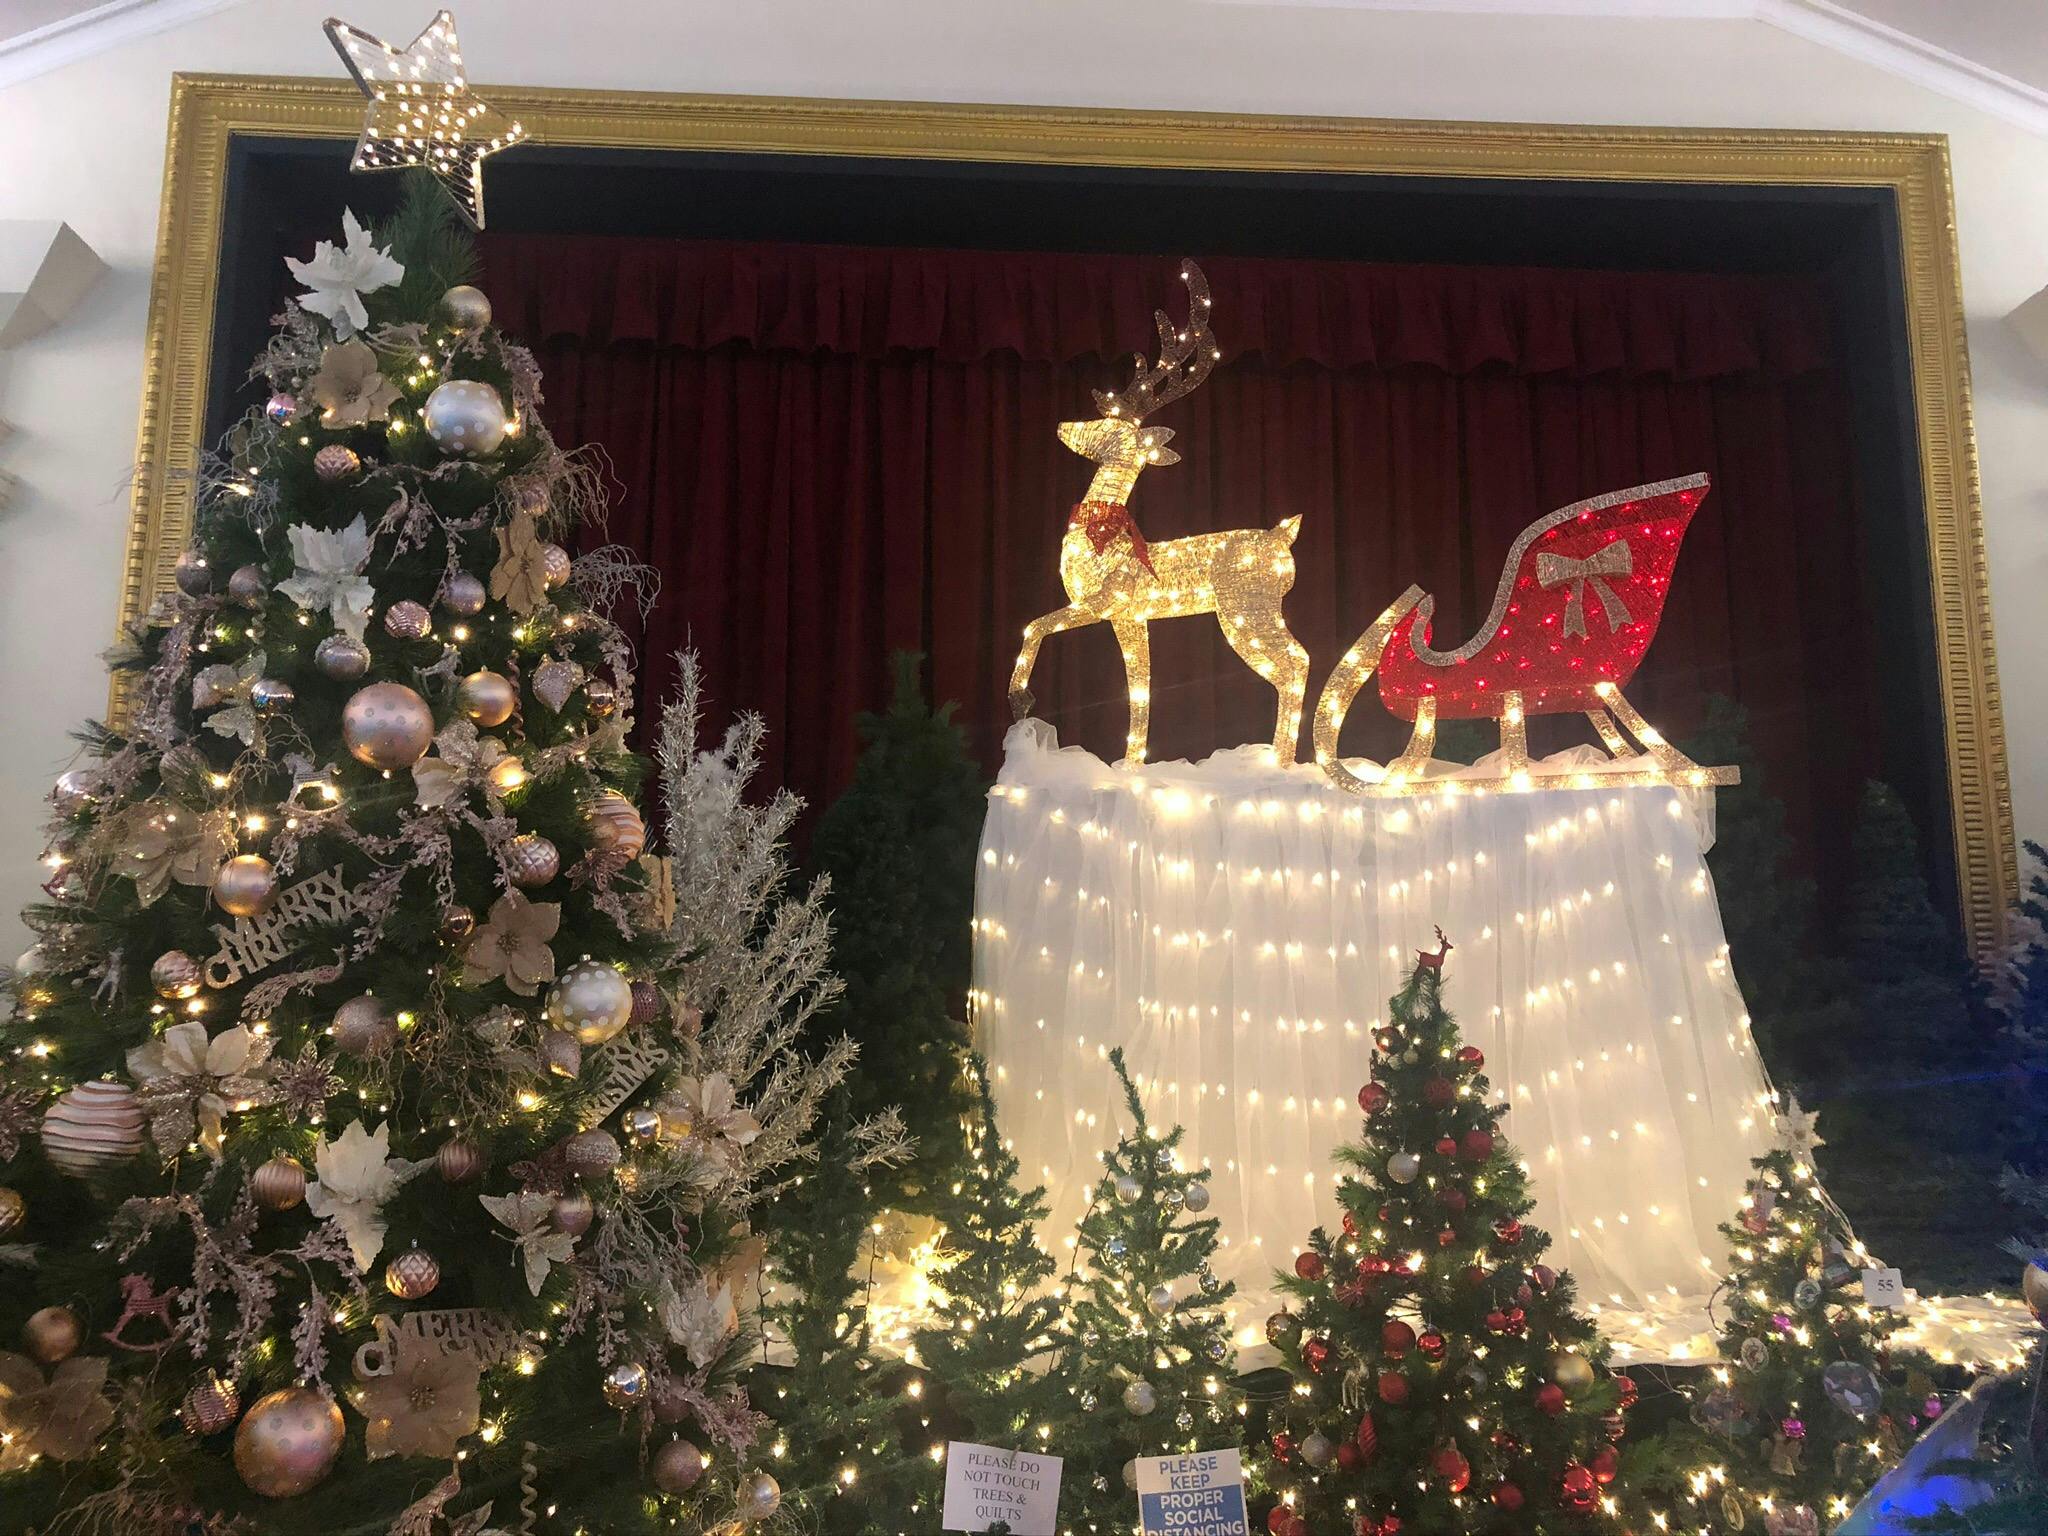 Beautiful display of Christmas